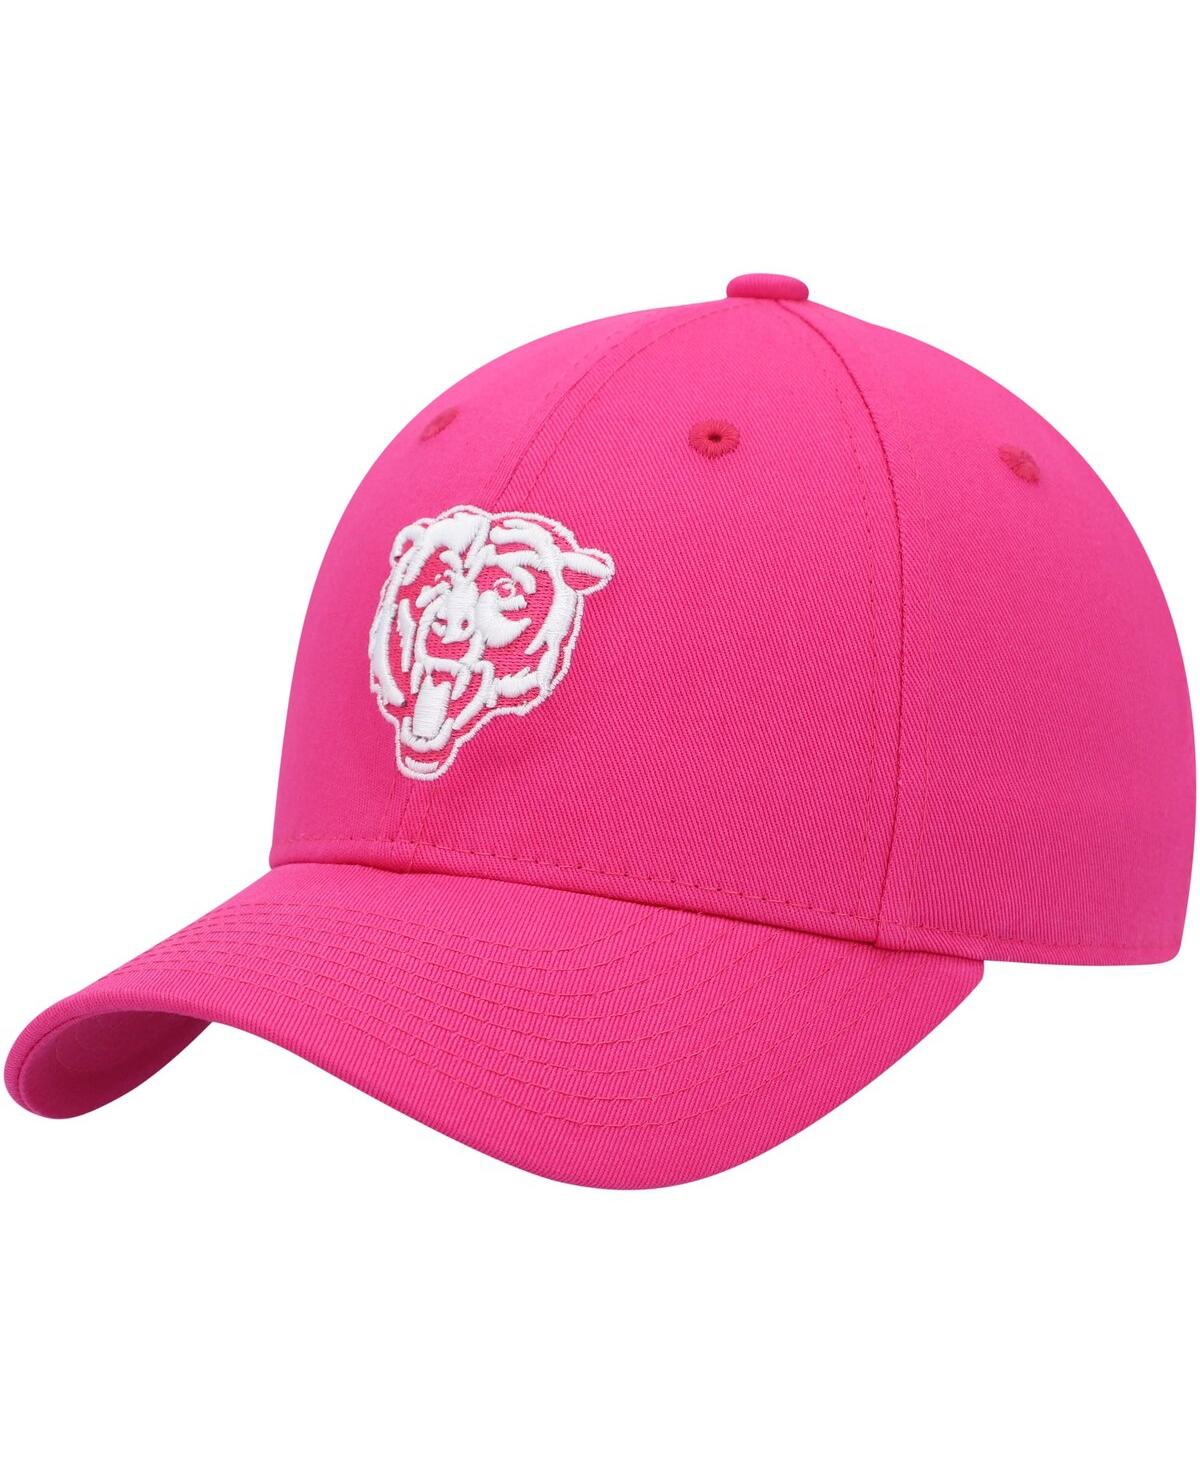 Outerstuff Kids' Big Girls Pink Chicago Bears Structured Adjustable Hat